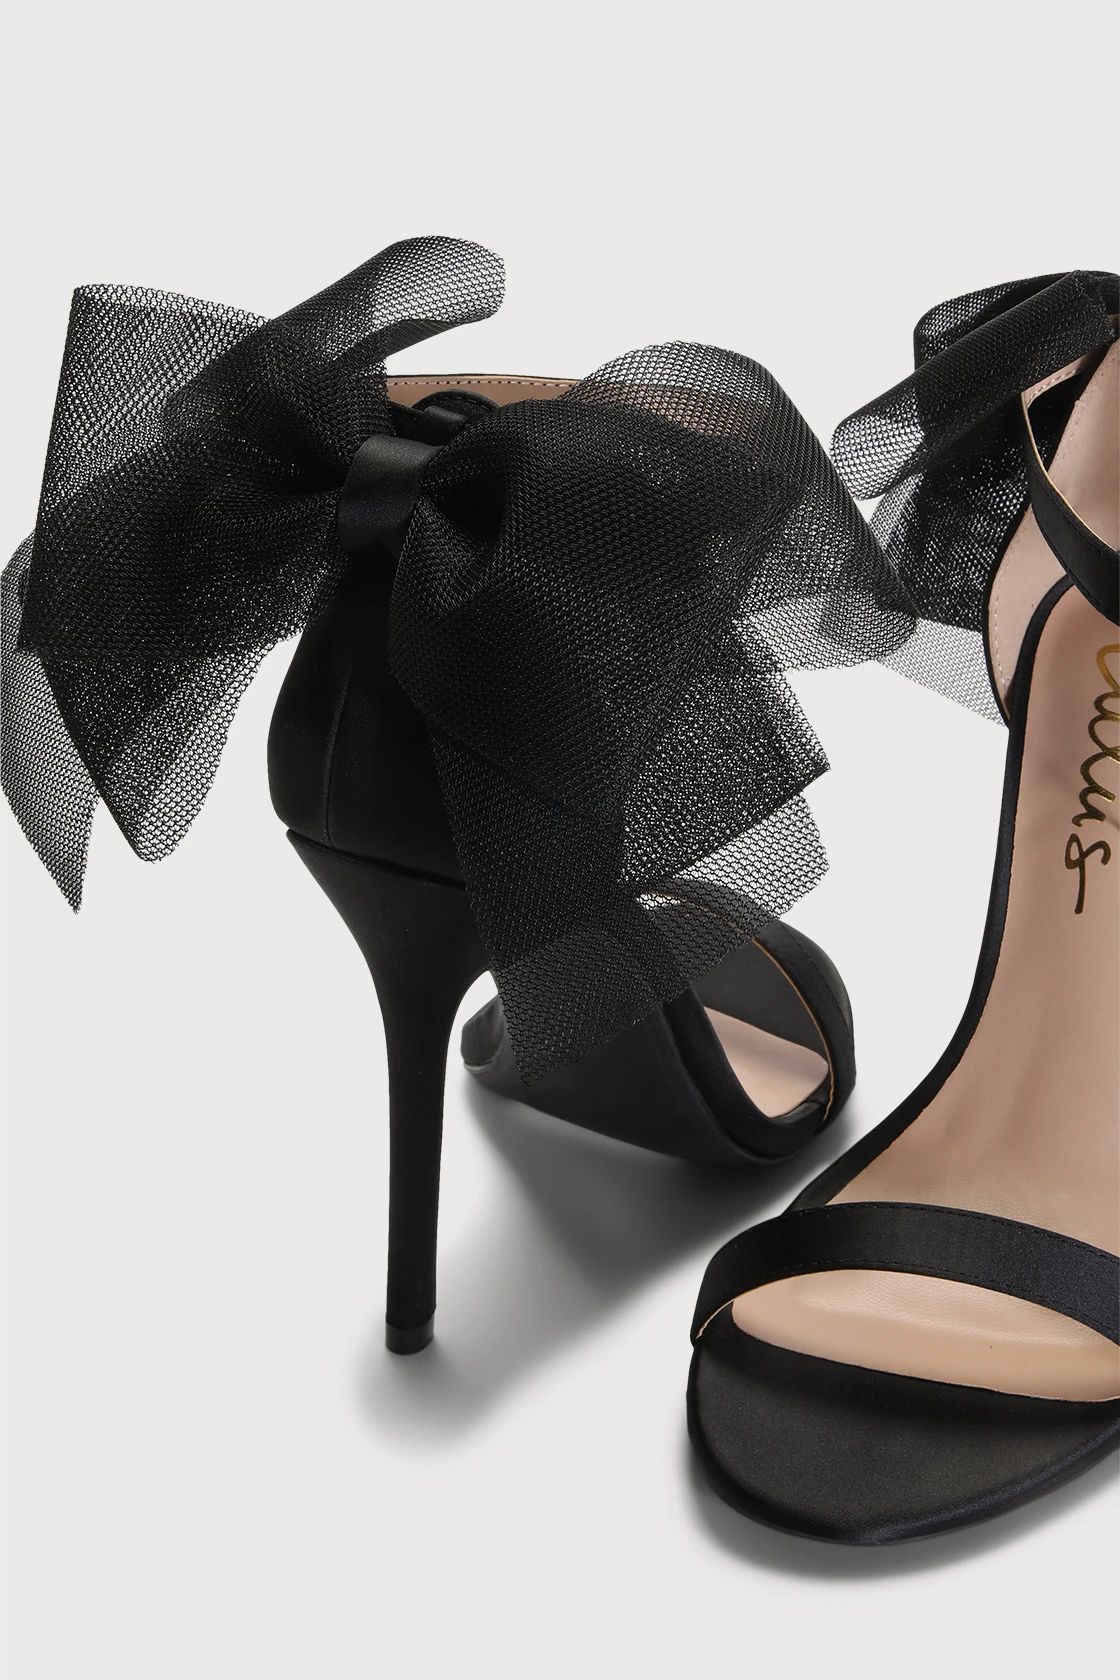 Ayanna Black Satin Bow Ankle-Strap High Heel Sandals | Lulus (US)